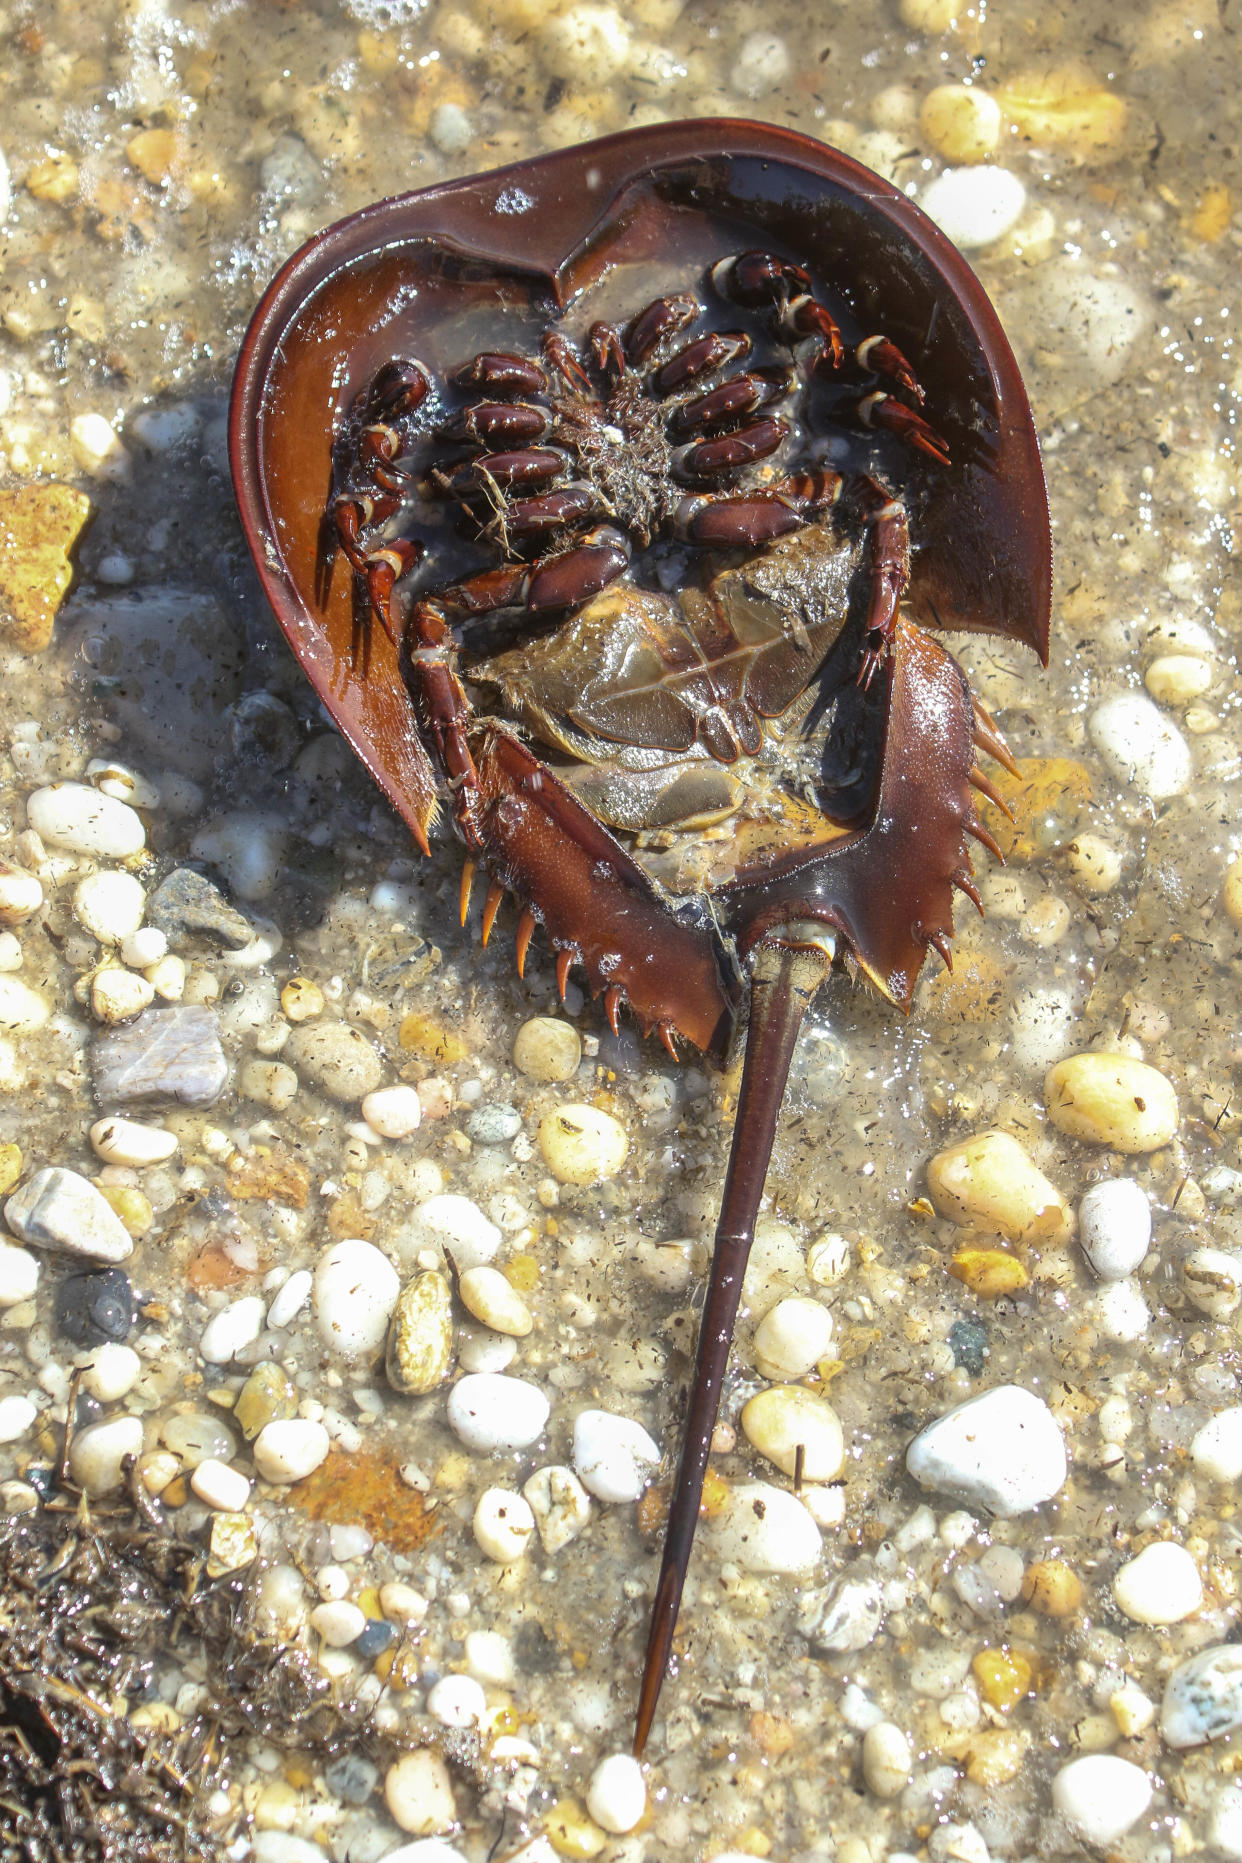 Horseshoe crab at Pickering Beach, Dover.